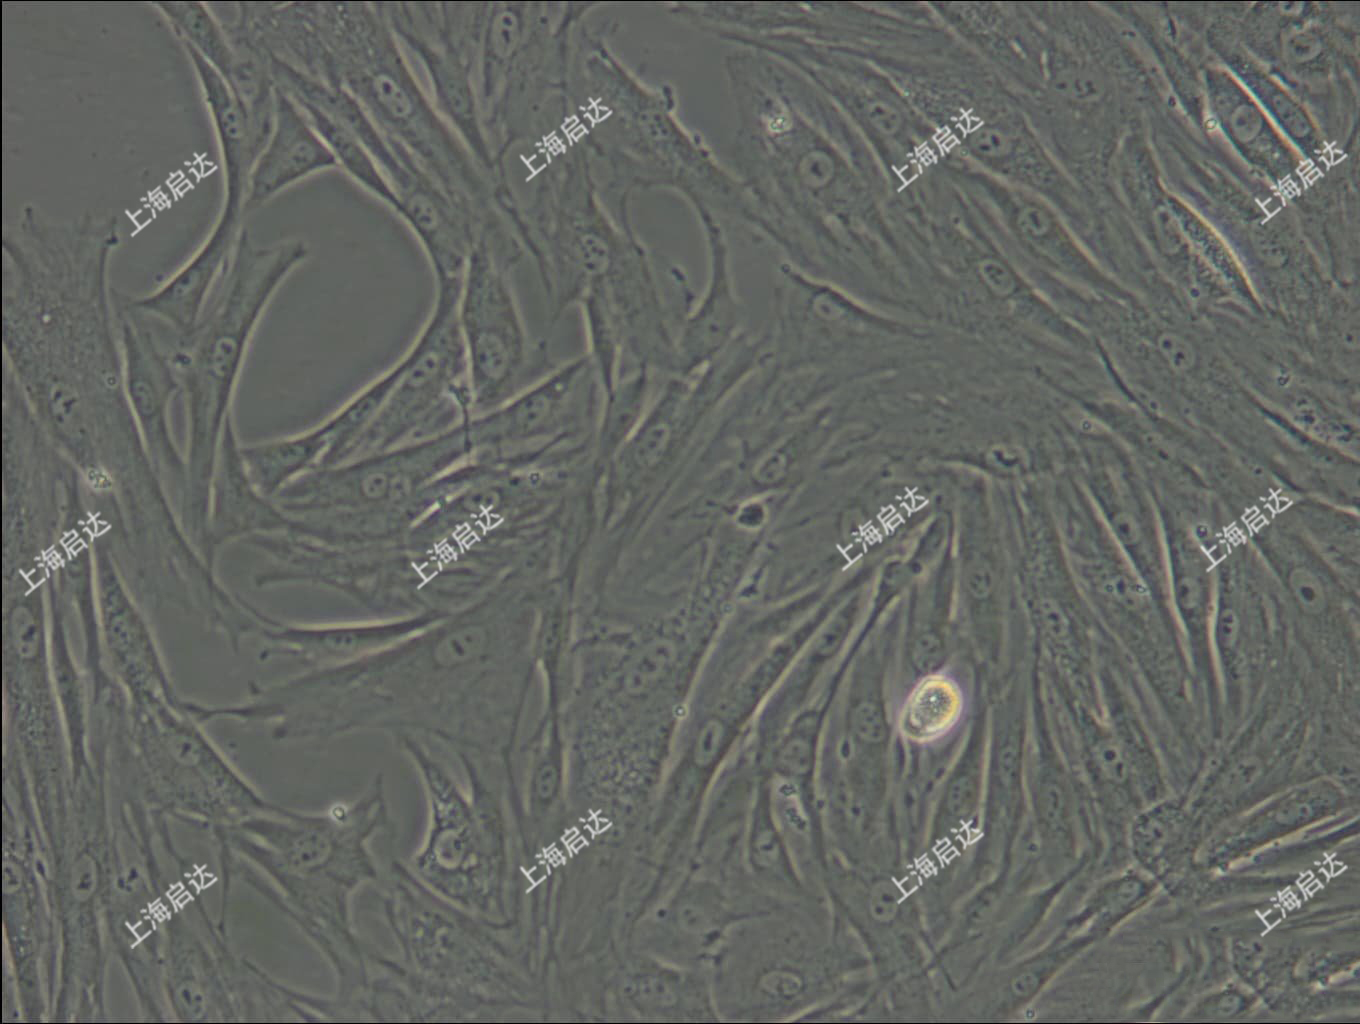 CCC-SMC-1兔主动脉平滑肌细胞